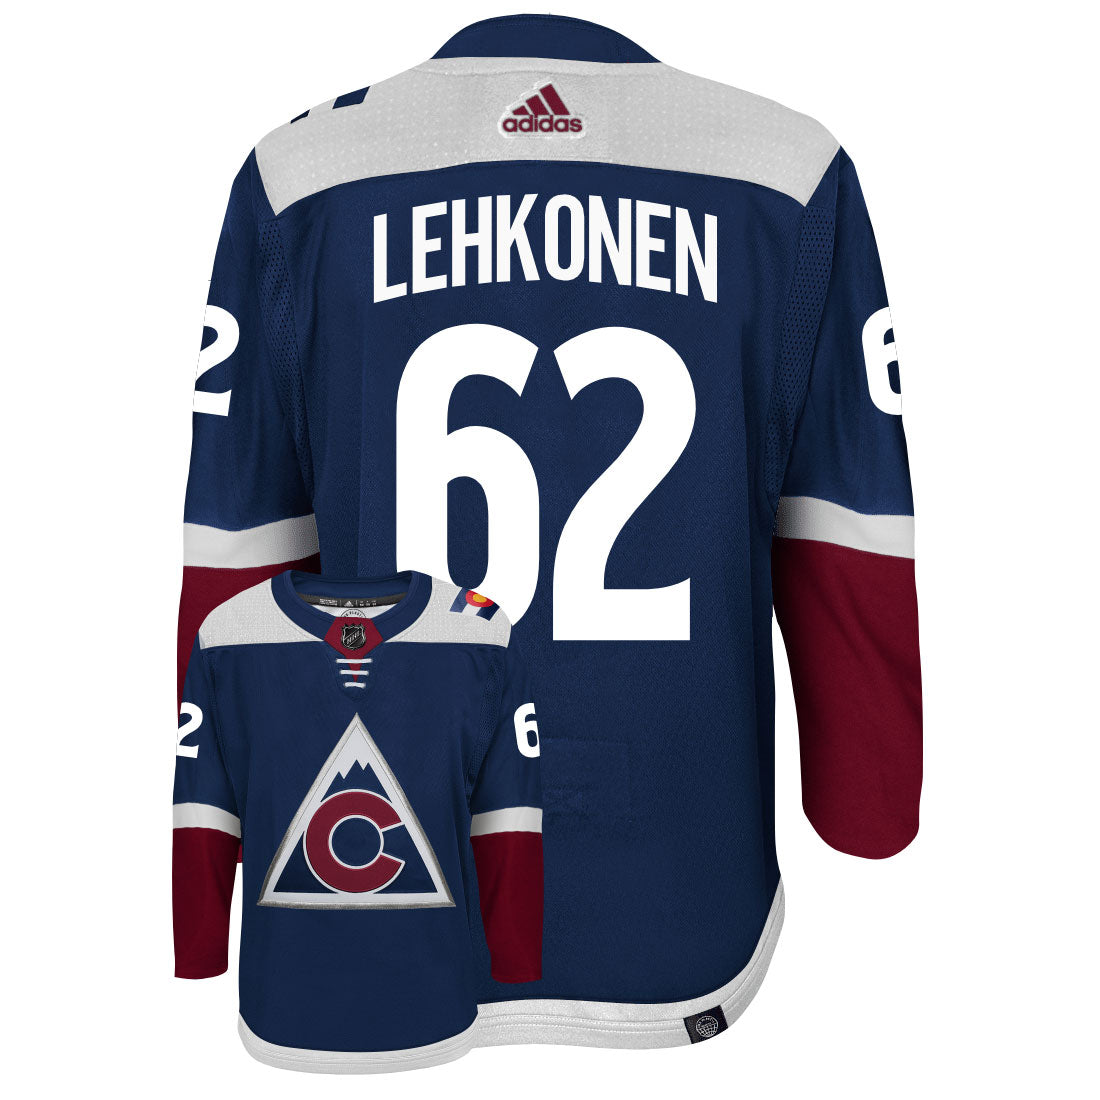 Arturri Lehkonen Colorado Avalanche Adidas Primegreen Authentic Third Alternate NHL Hockey Jersey - Back/Front View